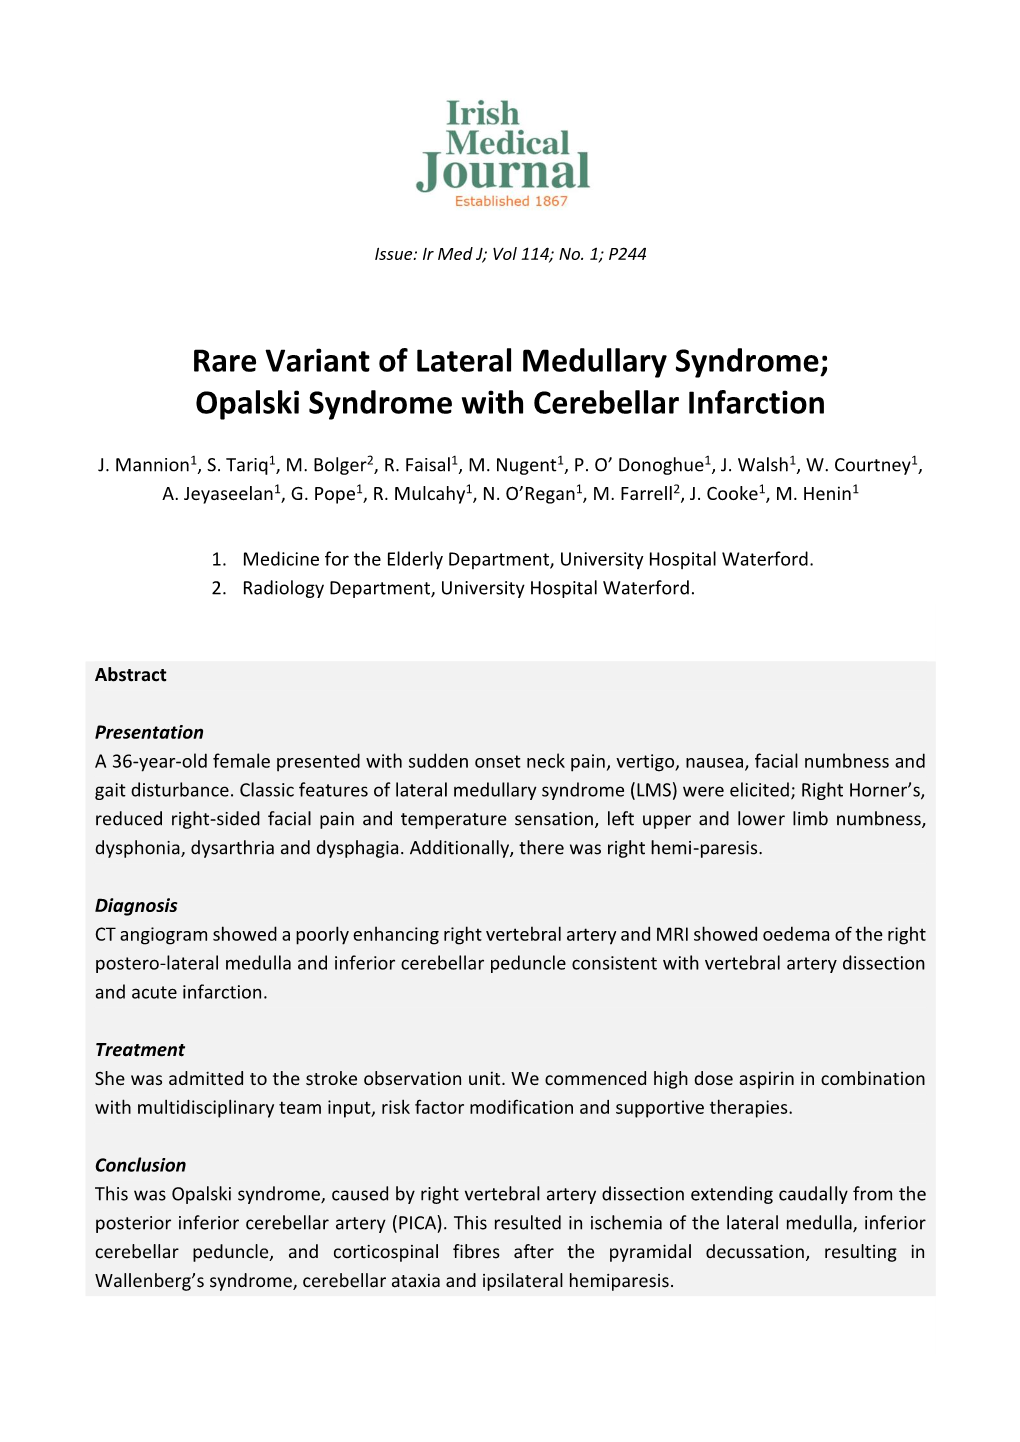 Opalski Syndrome with Cerebellar Infarction